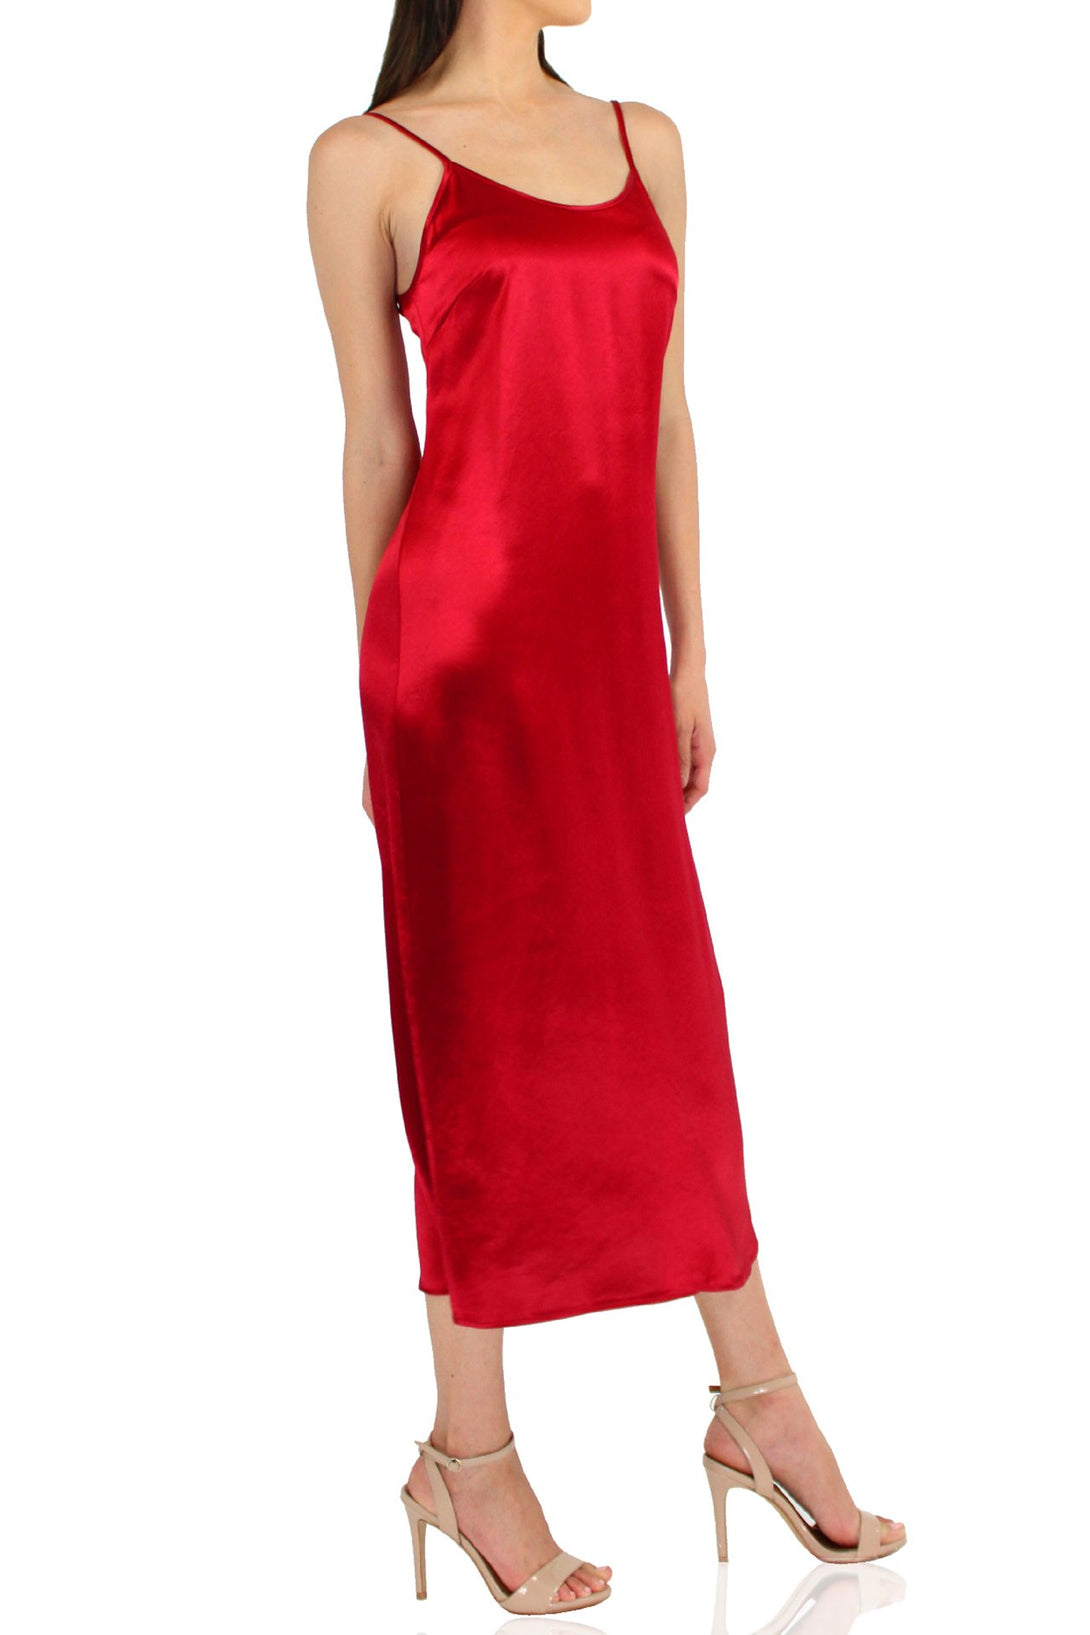 Designer-Red-Midi-Dress-By-Kyle